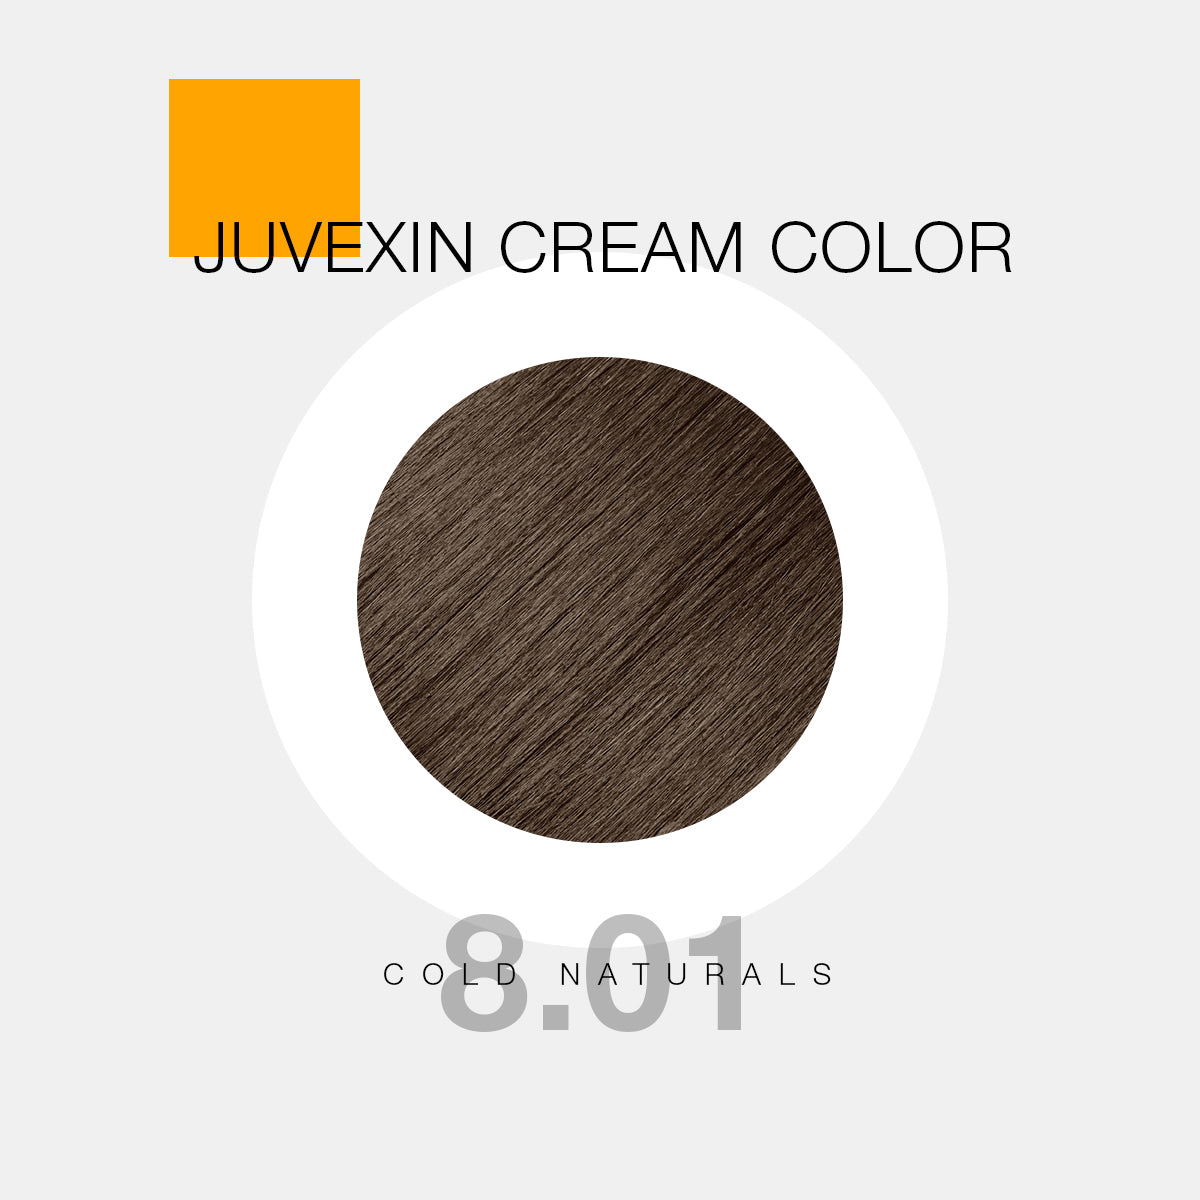 Juvexin Cream Color Pro Cold Naturals